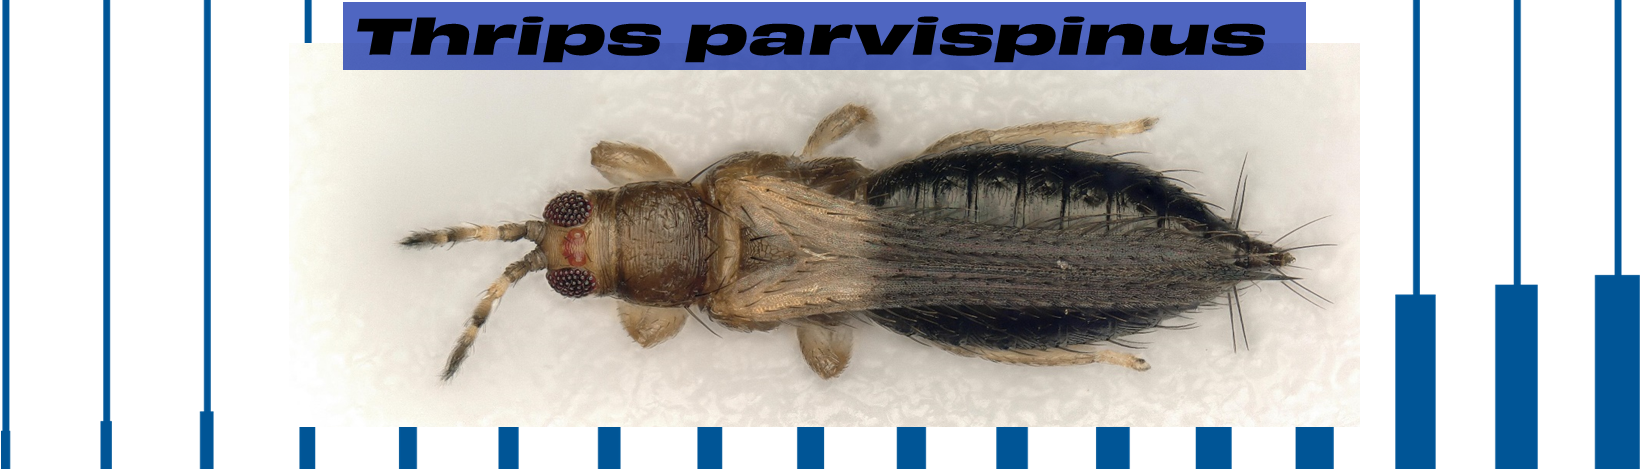 Thrips parvispinus